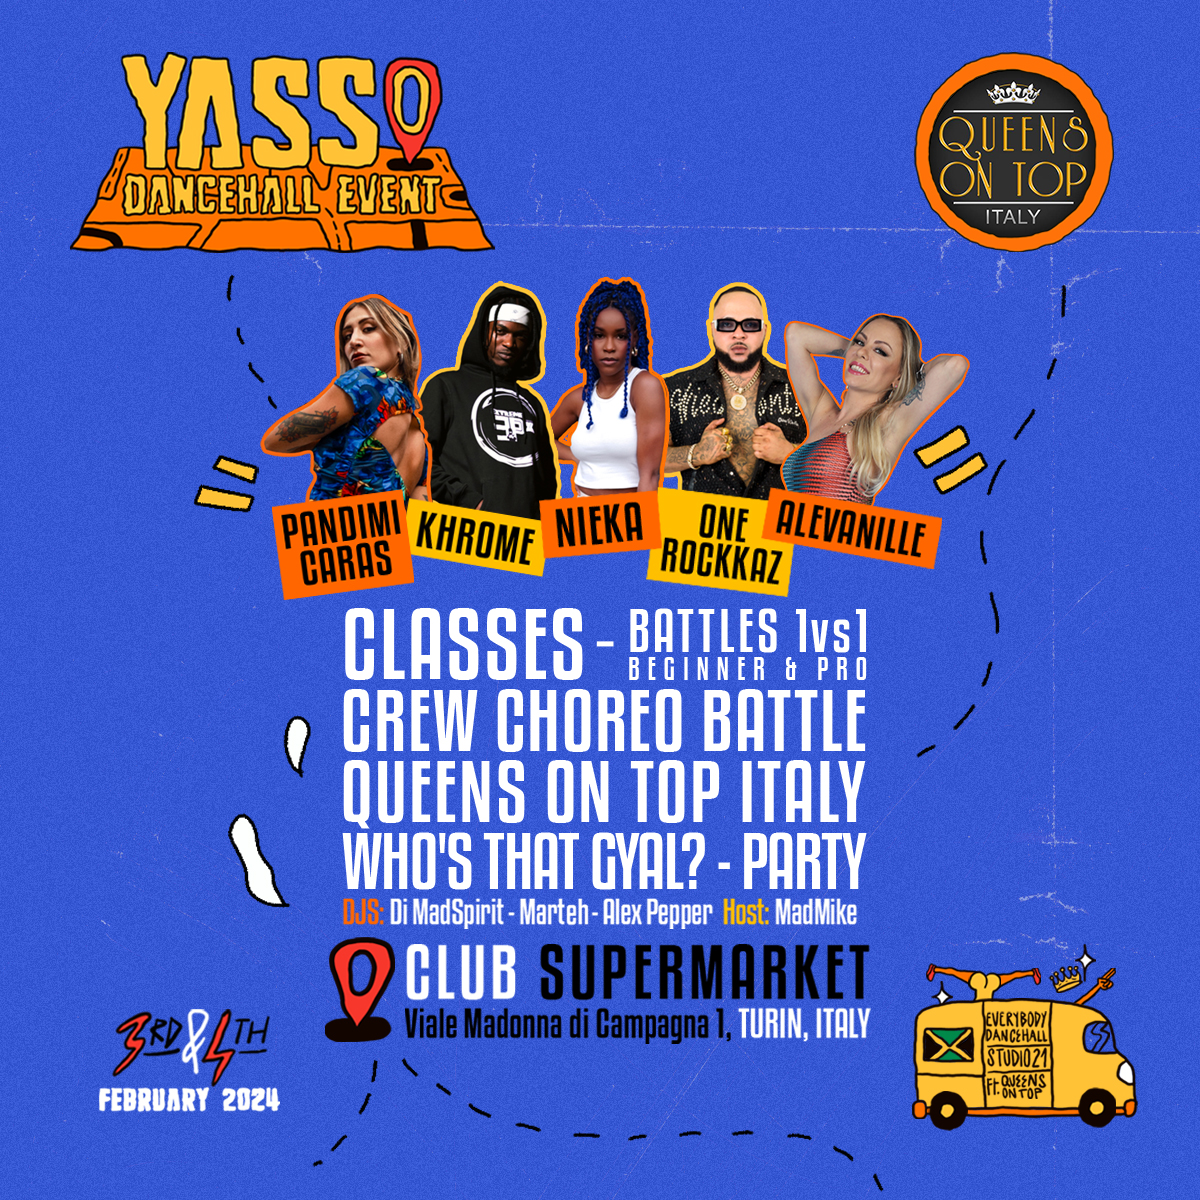 Yasso Evento dancehall torino 3-4 febbraio 2024